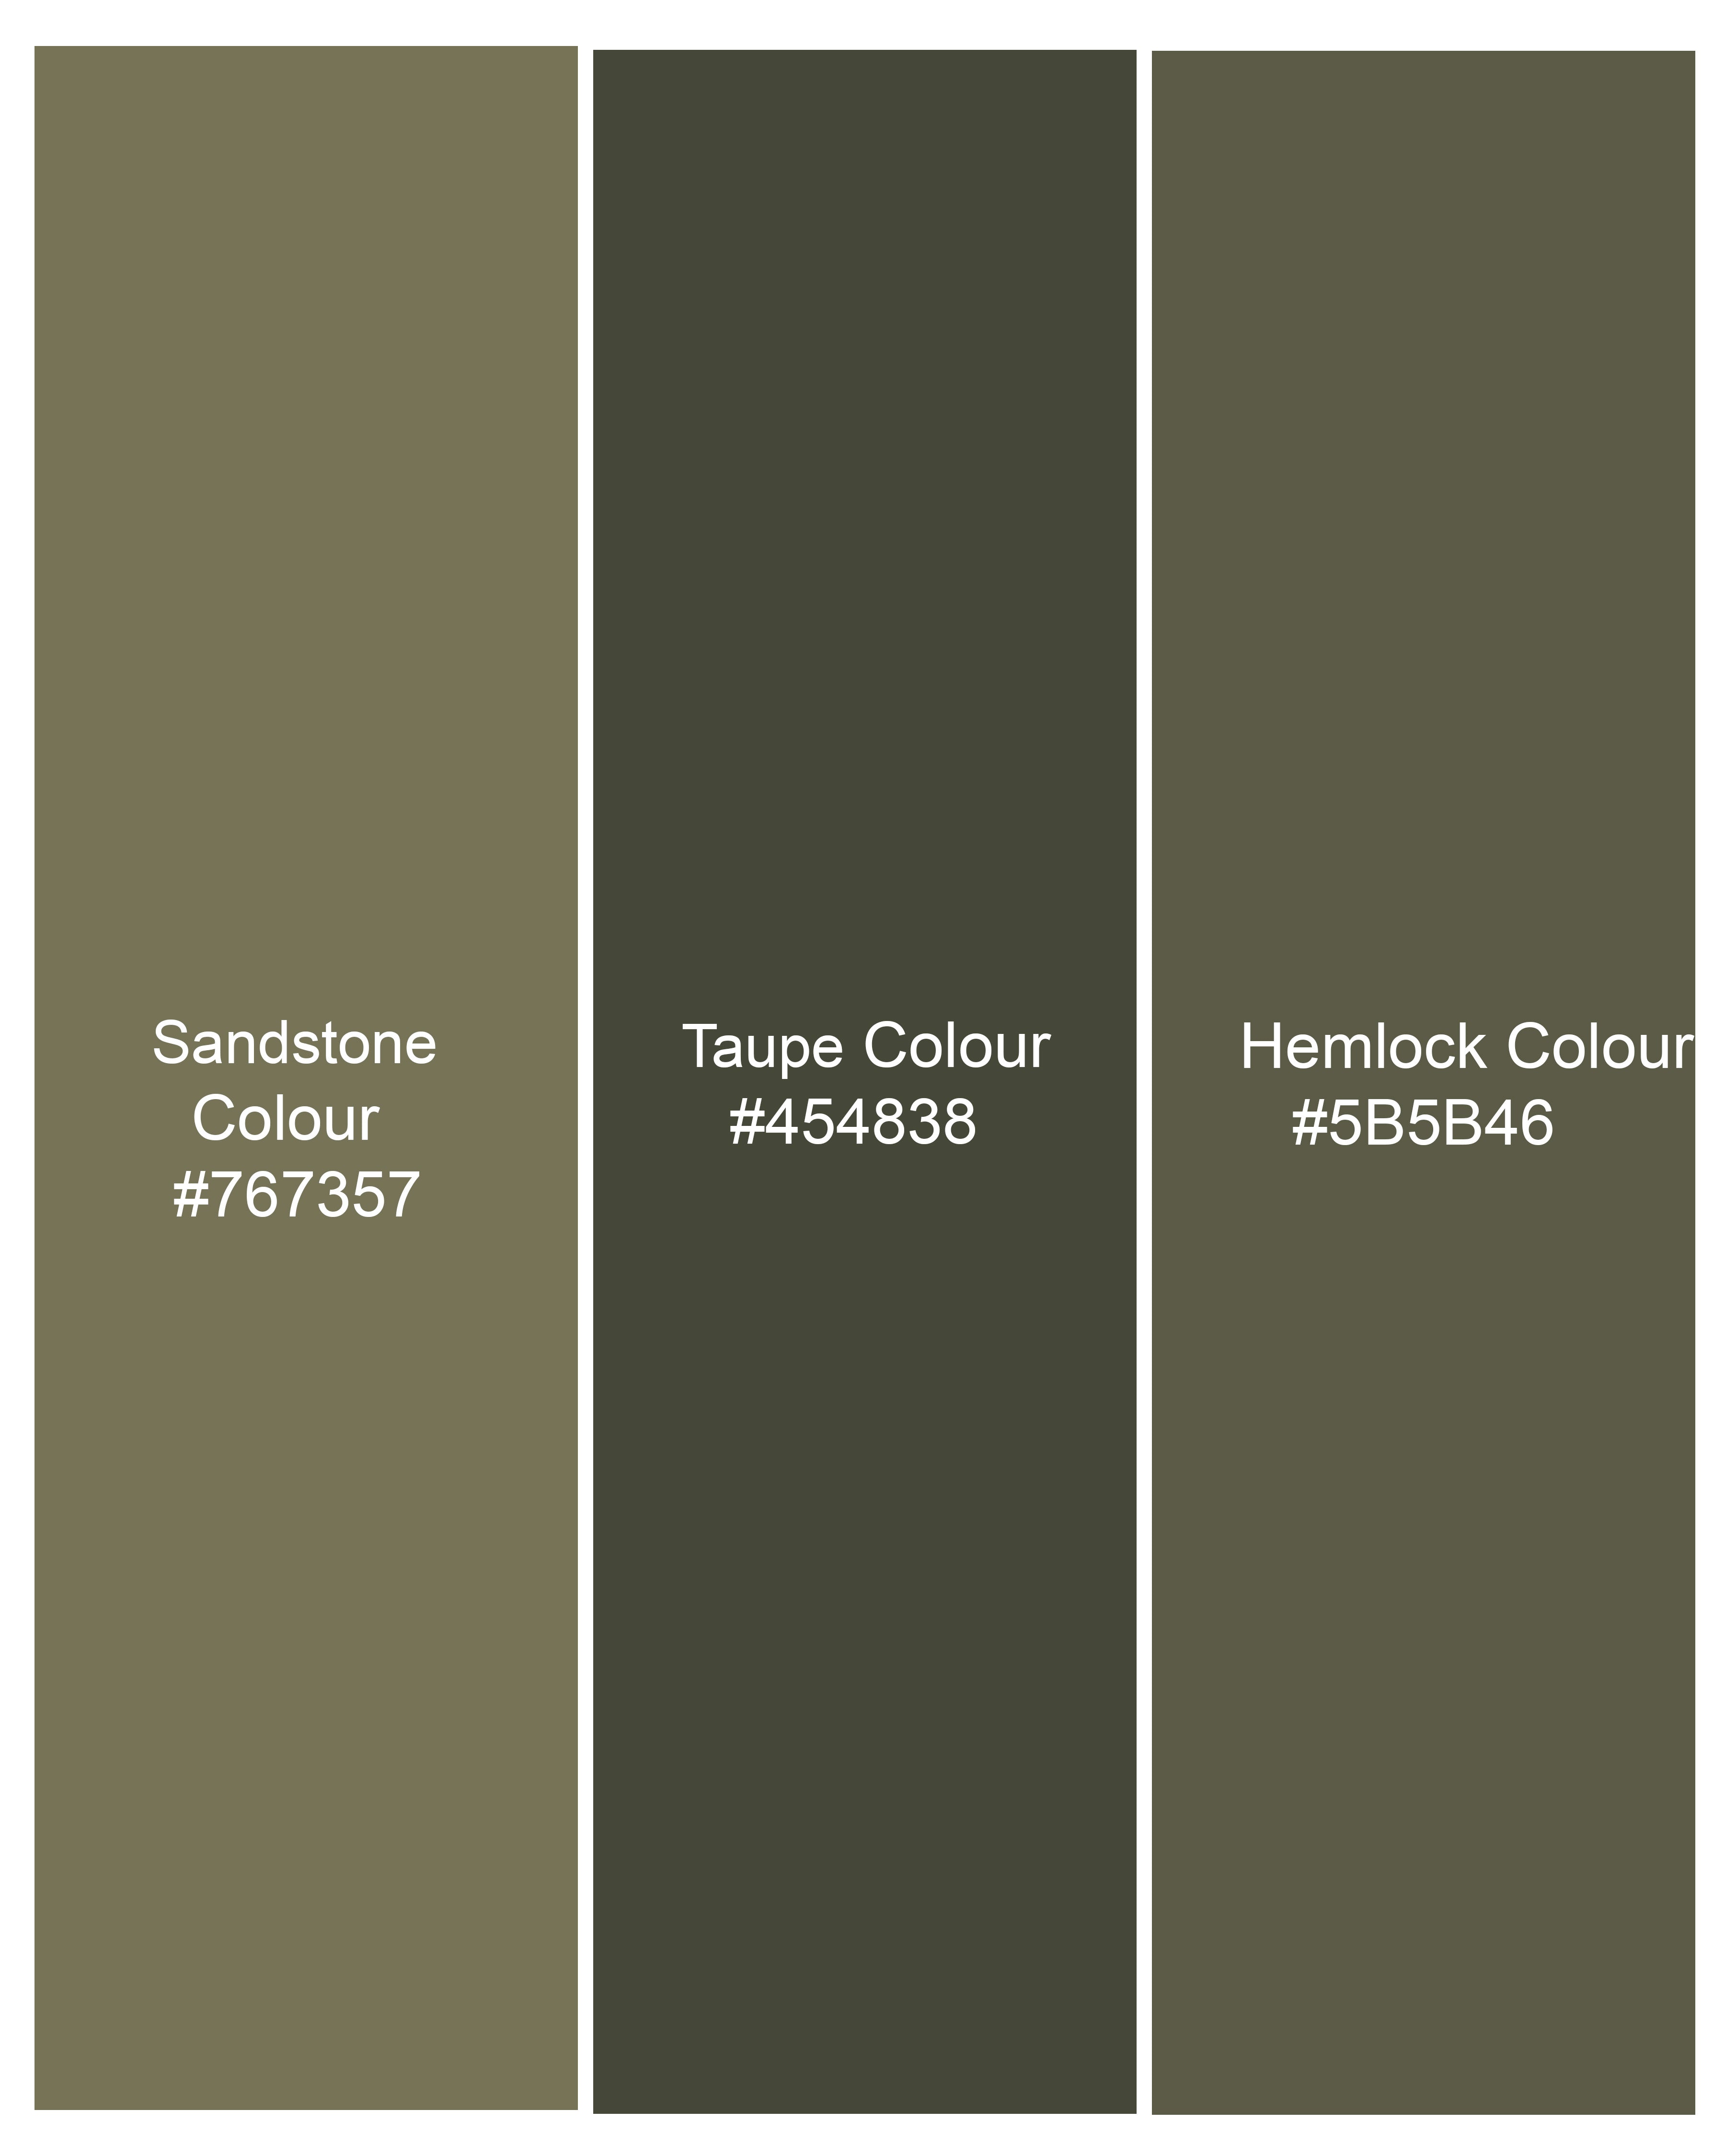 Sandstone with Taupe Green Camouflage Premium Cotton Designer Sports Blazer BL2302-SB-PP-36, BL2302-SB-PP-38, BL2302-SB-PP-40, BL2302-SB-PP-42, BL2302-SB-PP-44, BL2302-SB-PP-46, BL2302-SB-PP-48, BL2302-SB-PP-50, BL2302-SB-PP-52, BL2302-SB-PP-54, BL2302-SB-PP-56, BL2302-SB-PP-58, BL2302-SB-PP-60